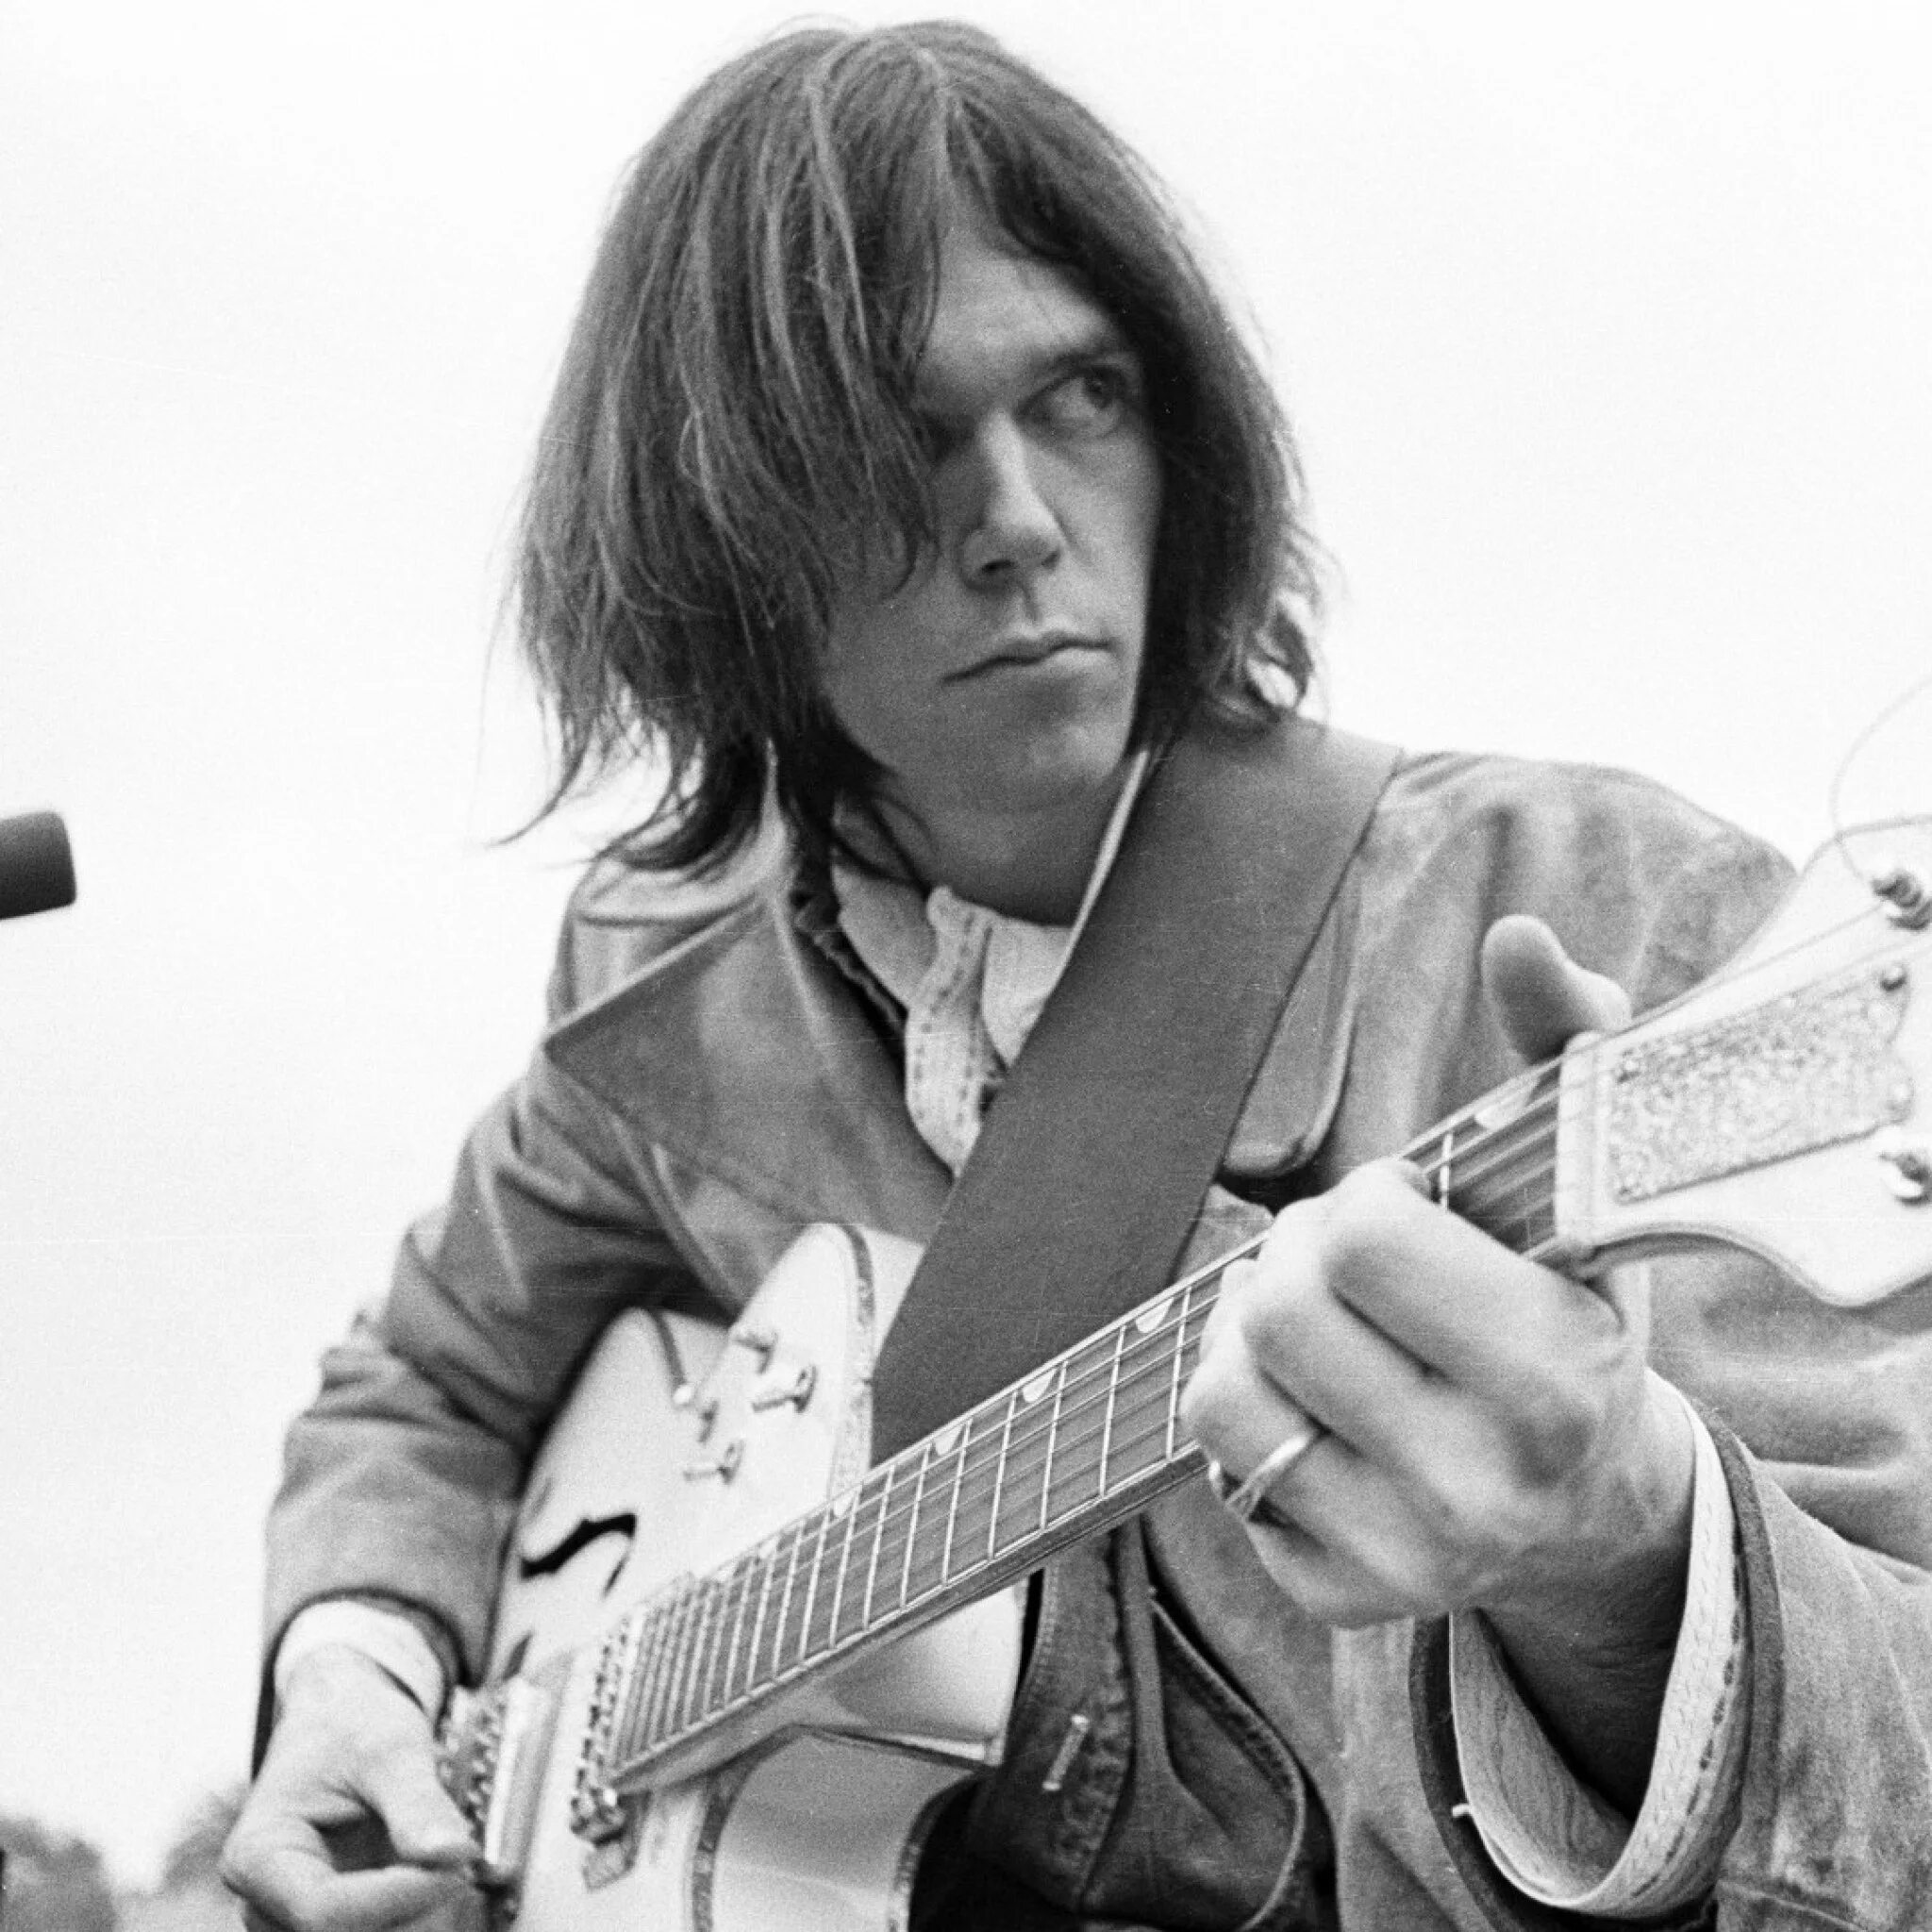 Neil young. Neil young в молодости. Neil young 1969. Neil young гитары.